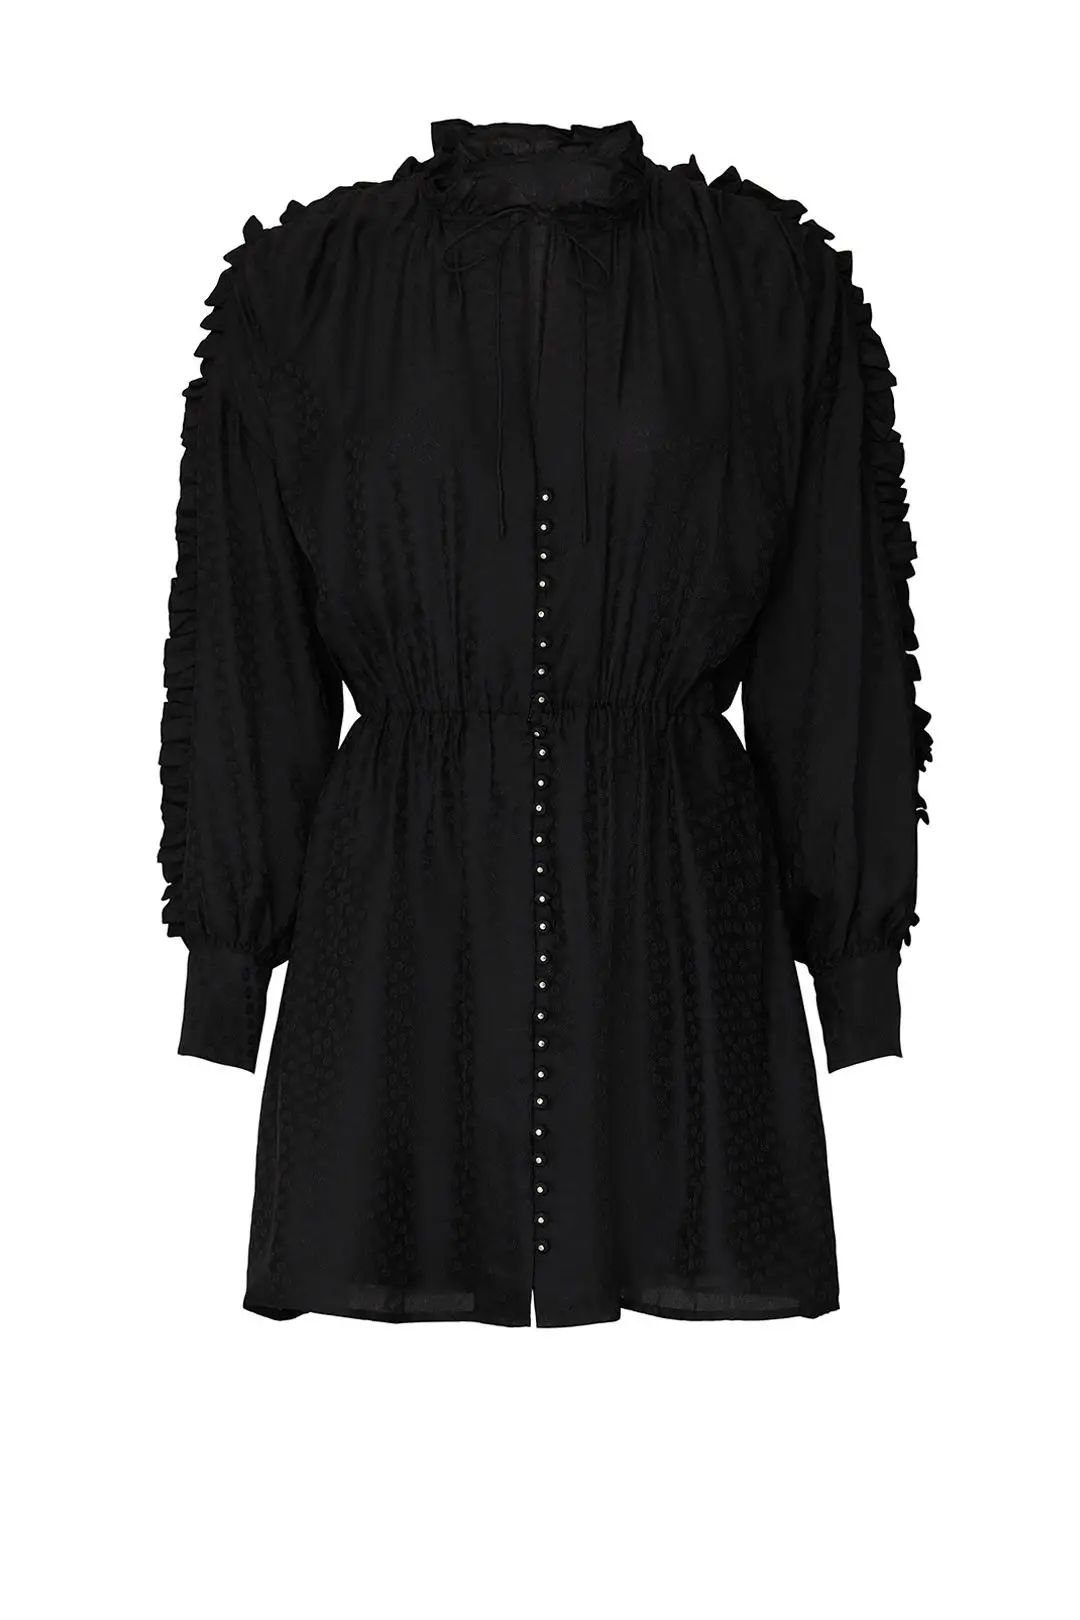 The Kooples Black Silk Ruffle Sleeve Dress | Rent The Runway